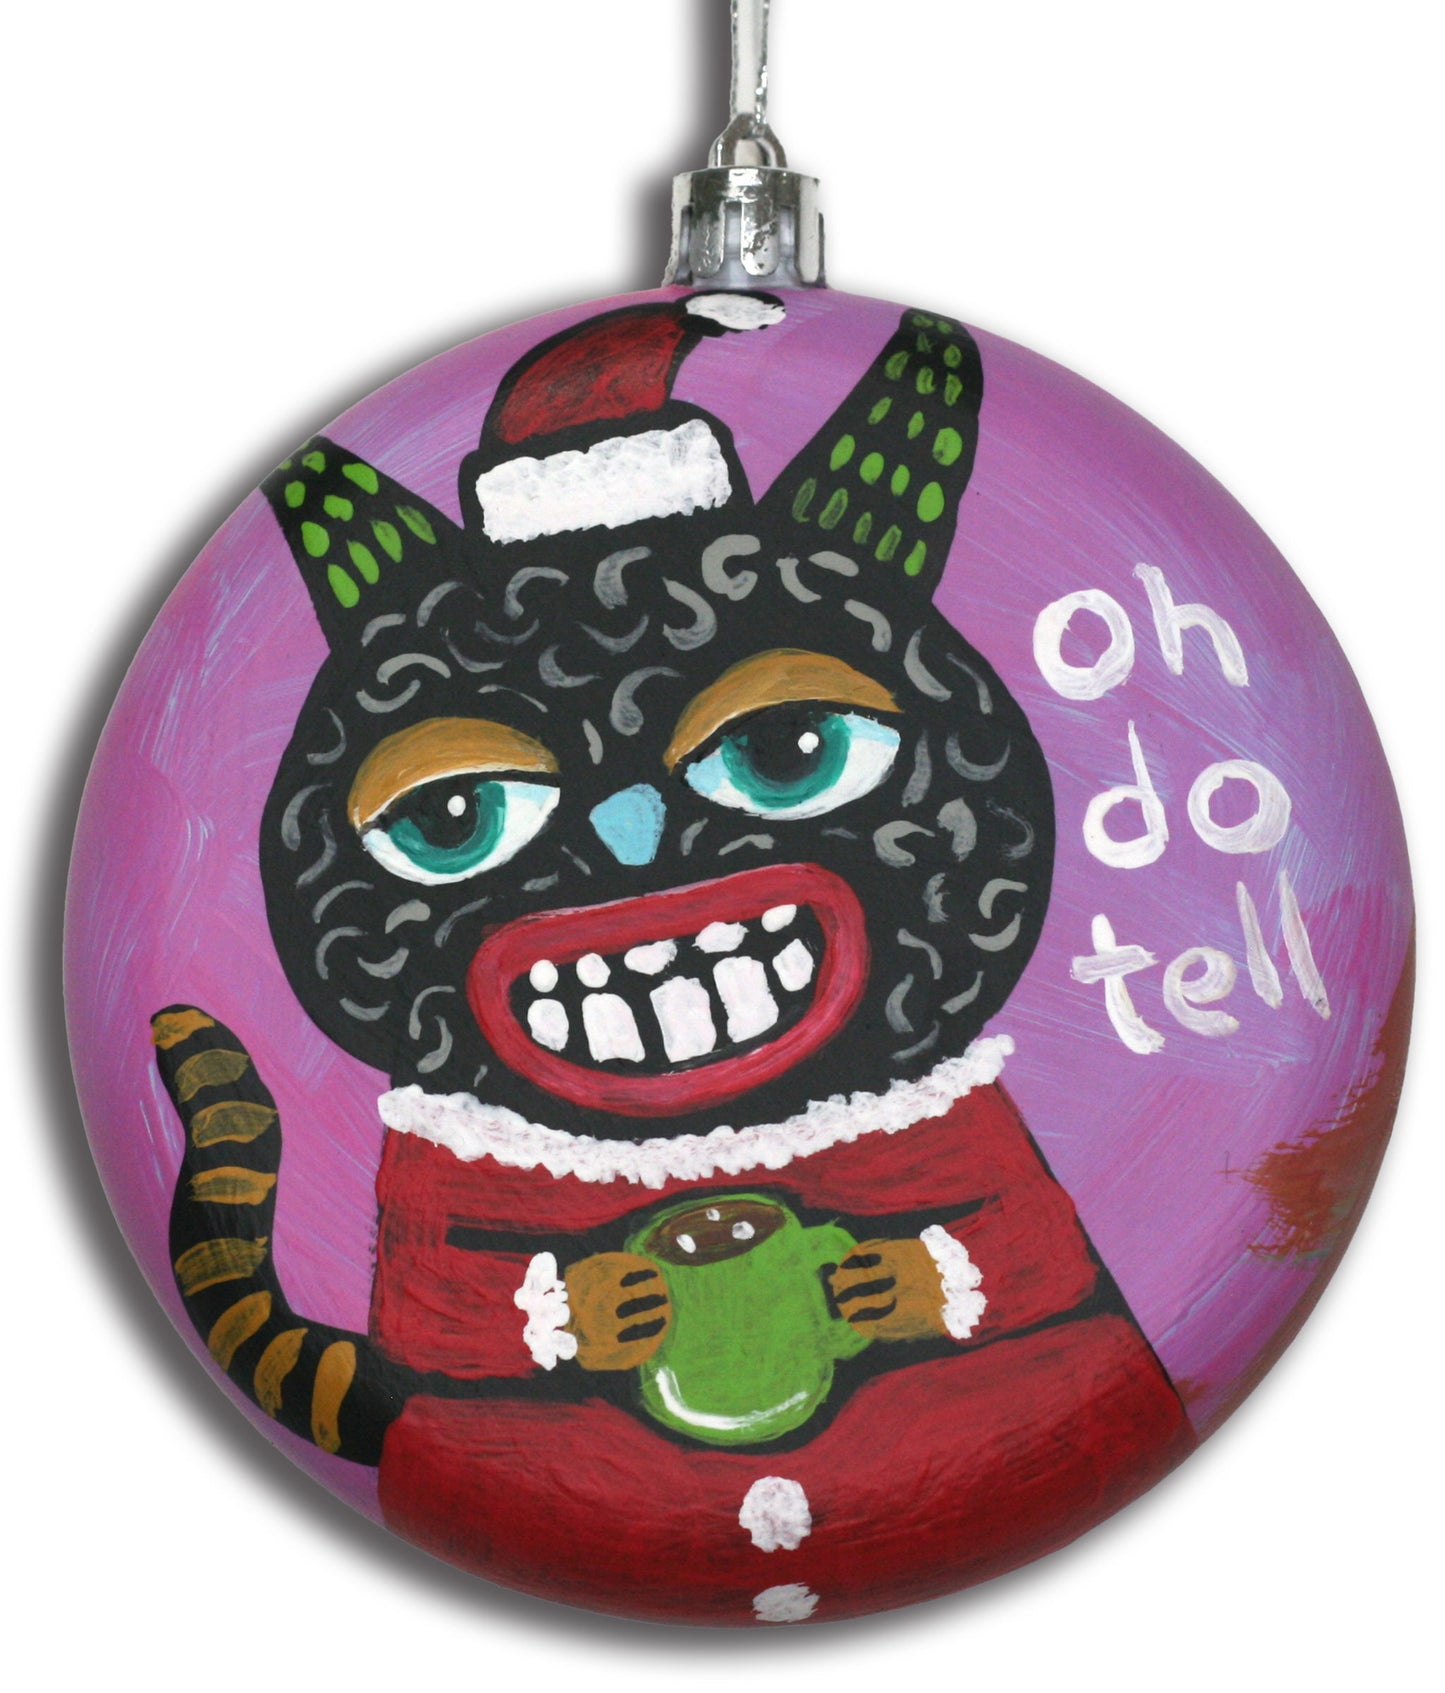 Oh Do Tell Christmas ornament